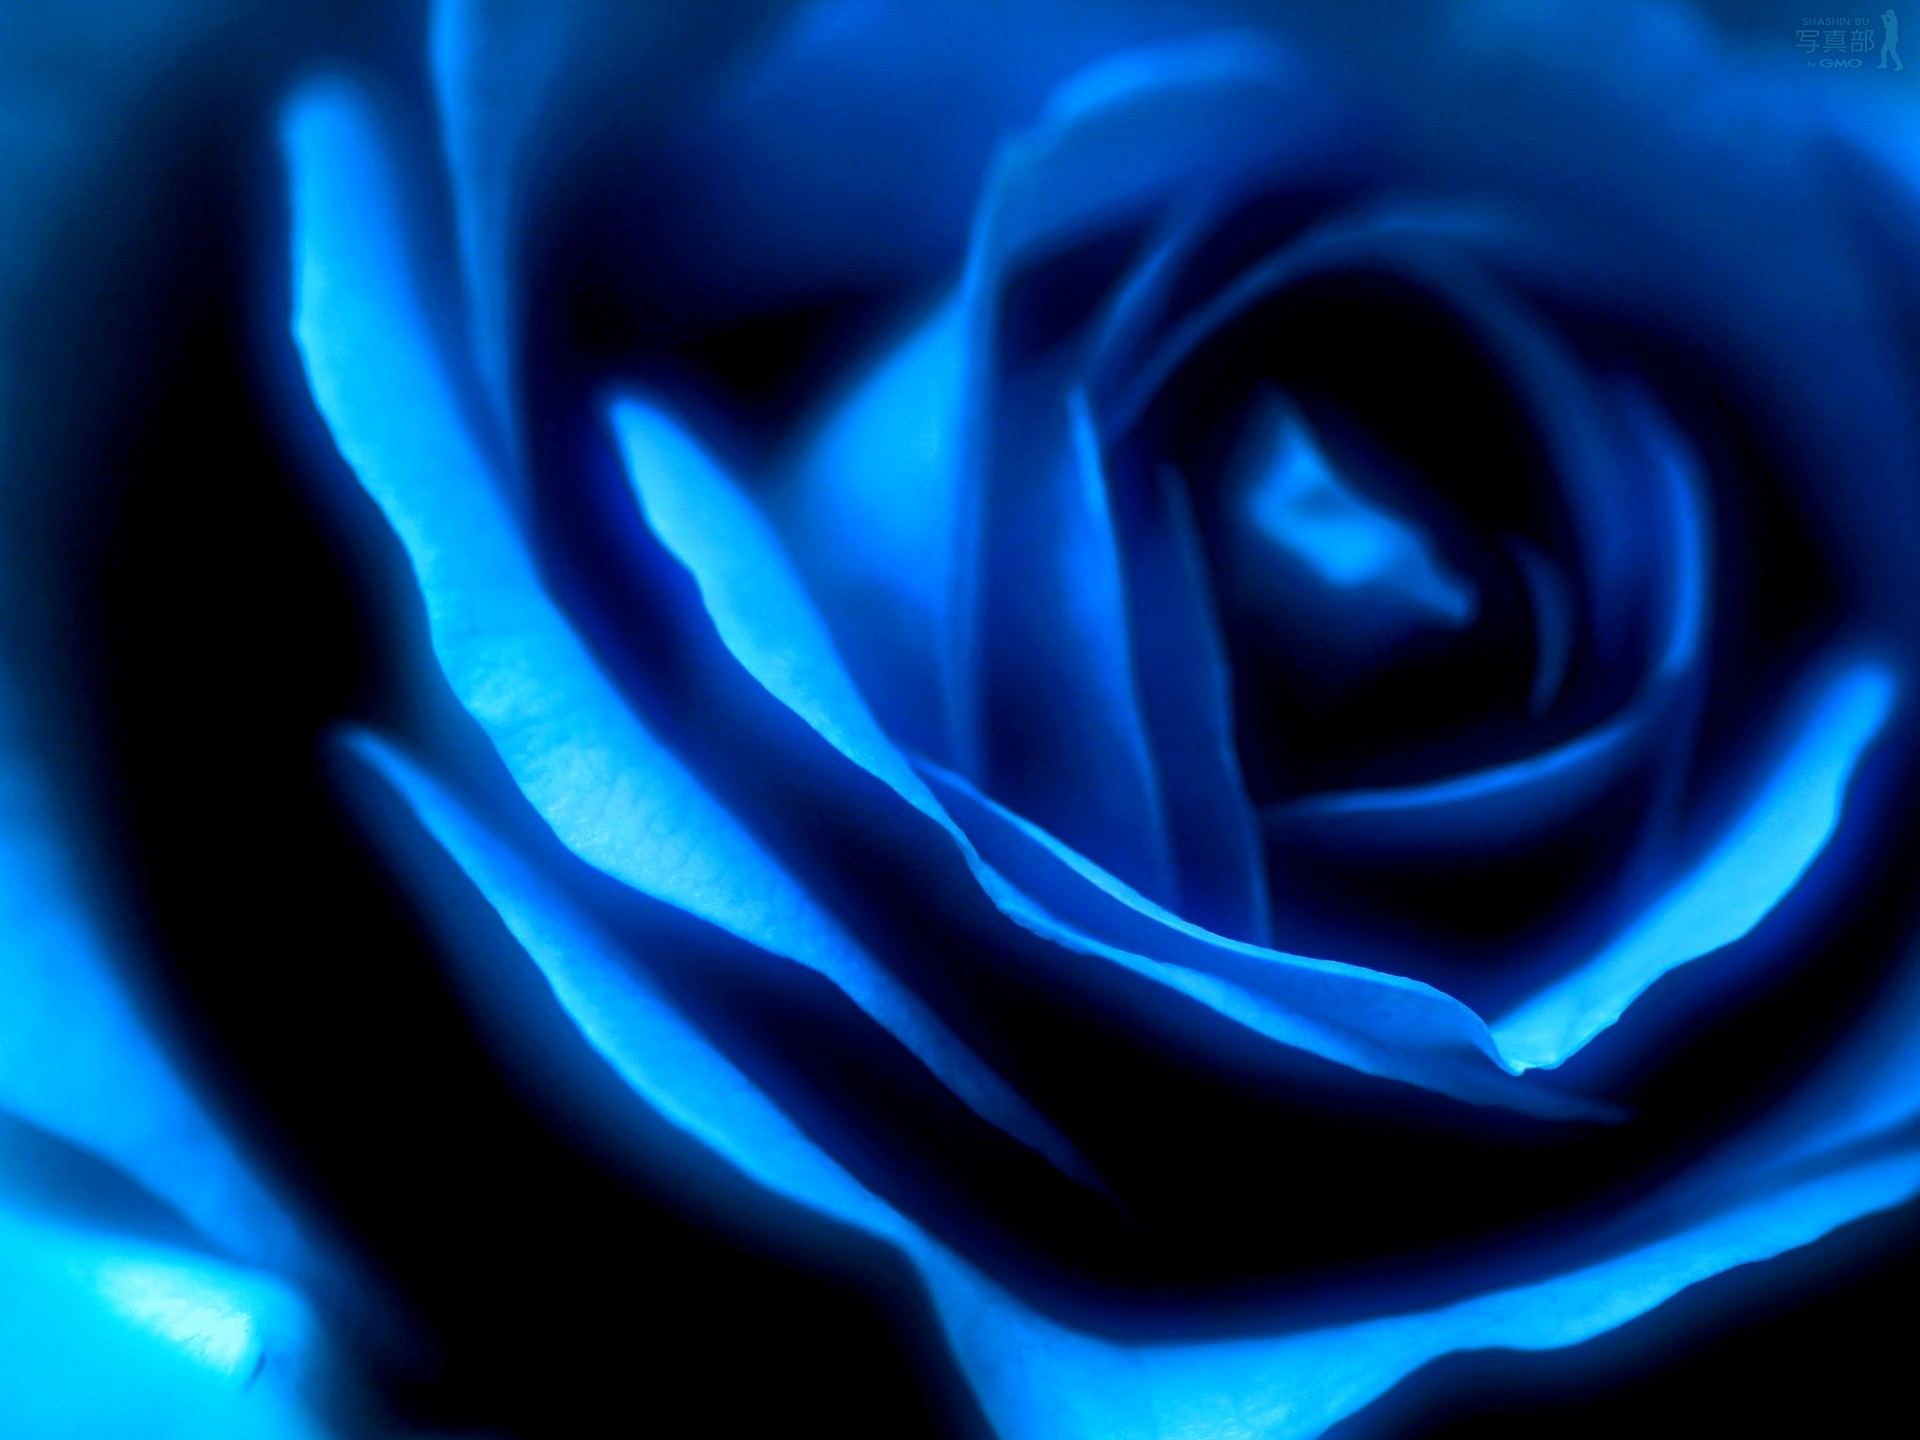 Blue Rose High Definition Wallpaper Photos For Desktop